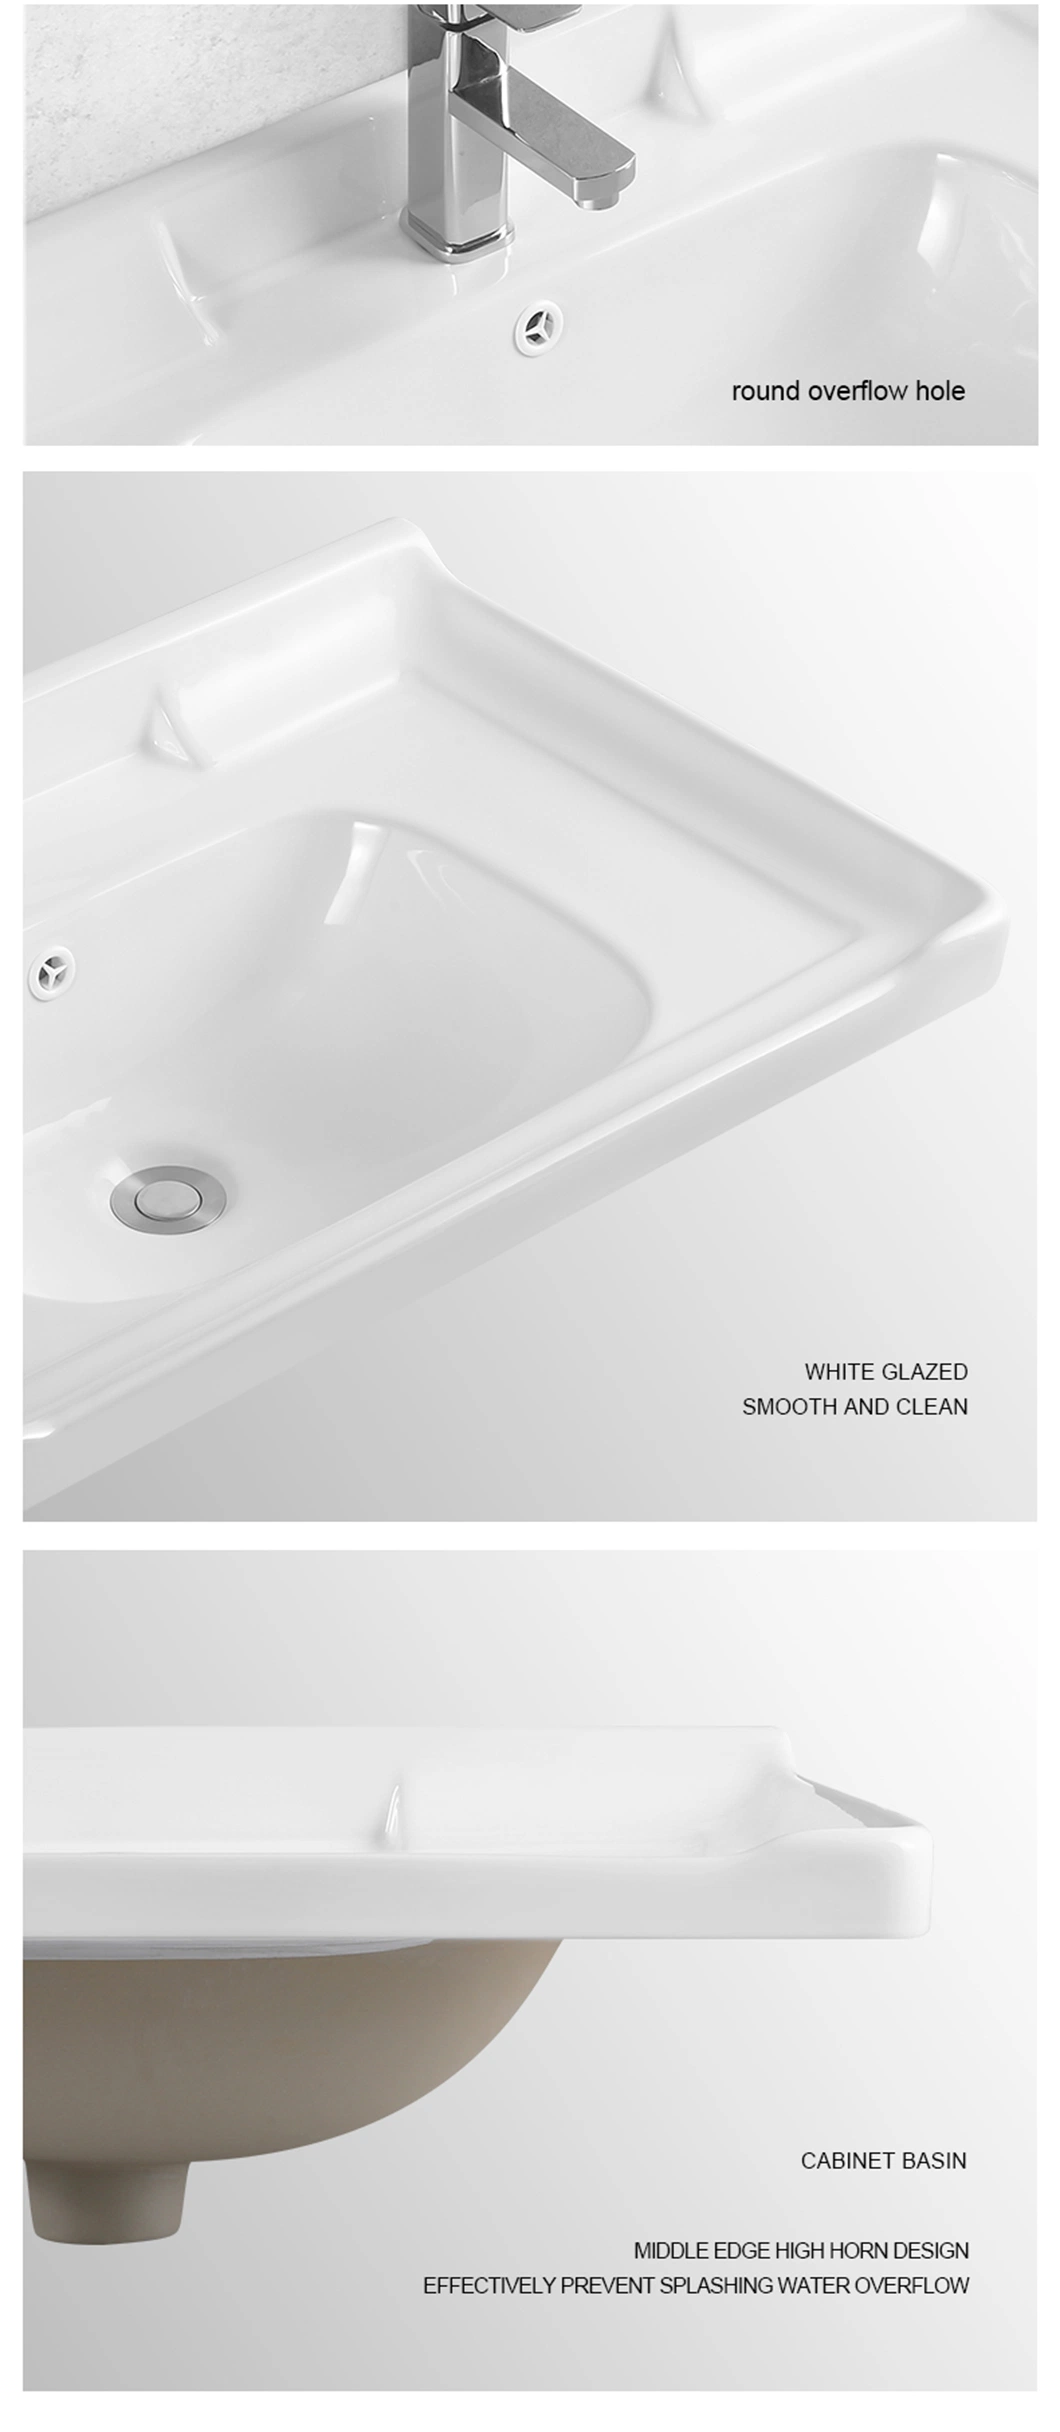 Factory Wholesale Ceramic Bathroom Basin Vanity Cabinets Rectangle Cabinet Wash Basin